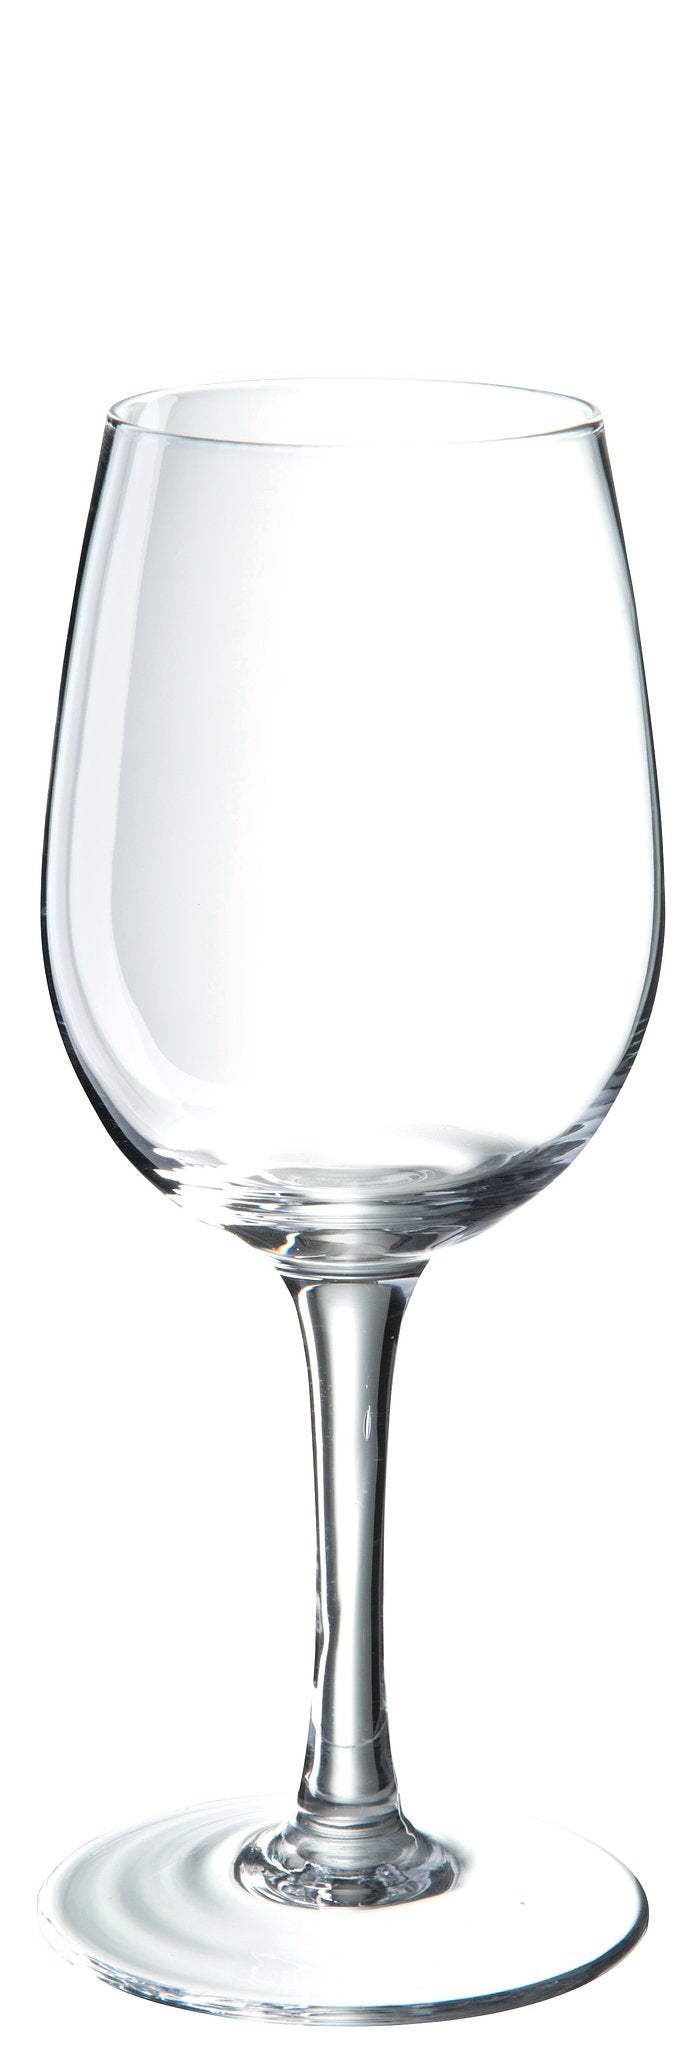 J-Line wijnglas - glas  - 6 stuks